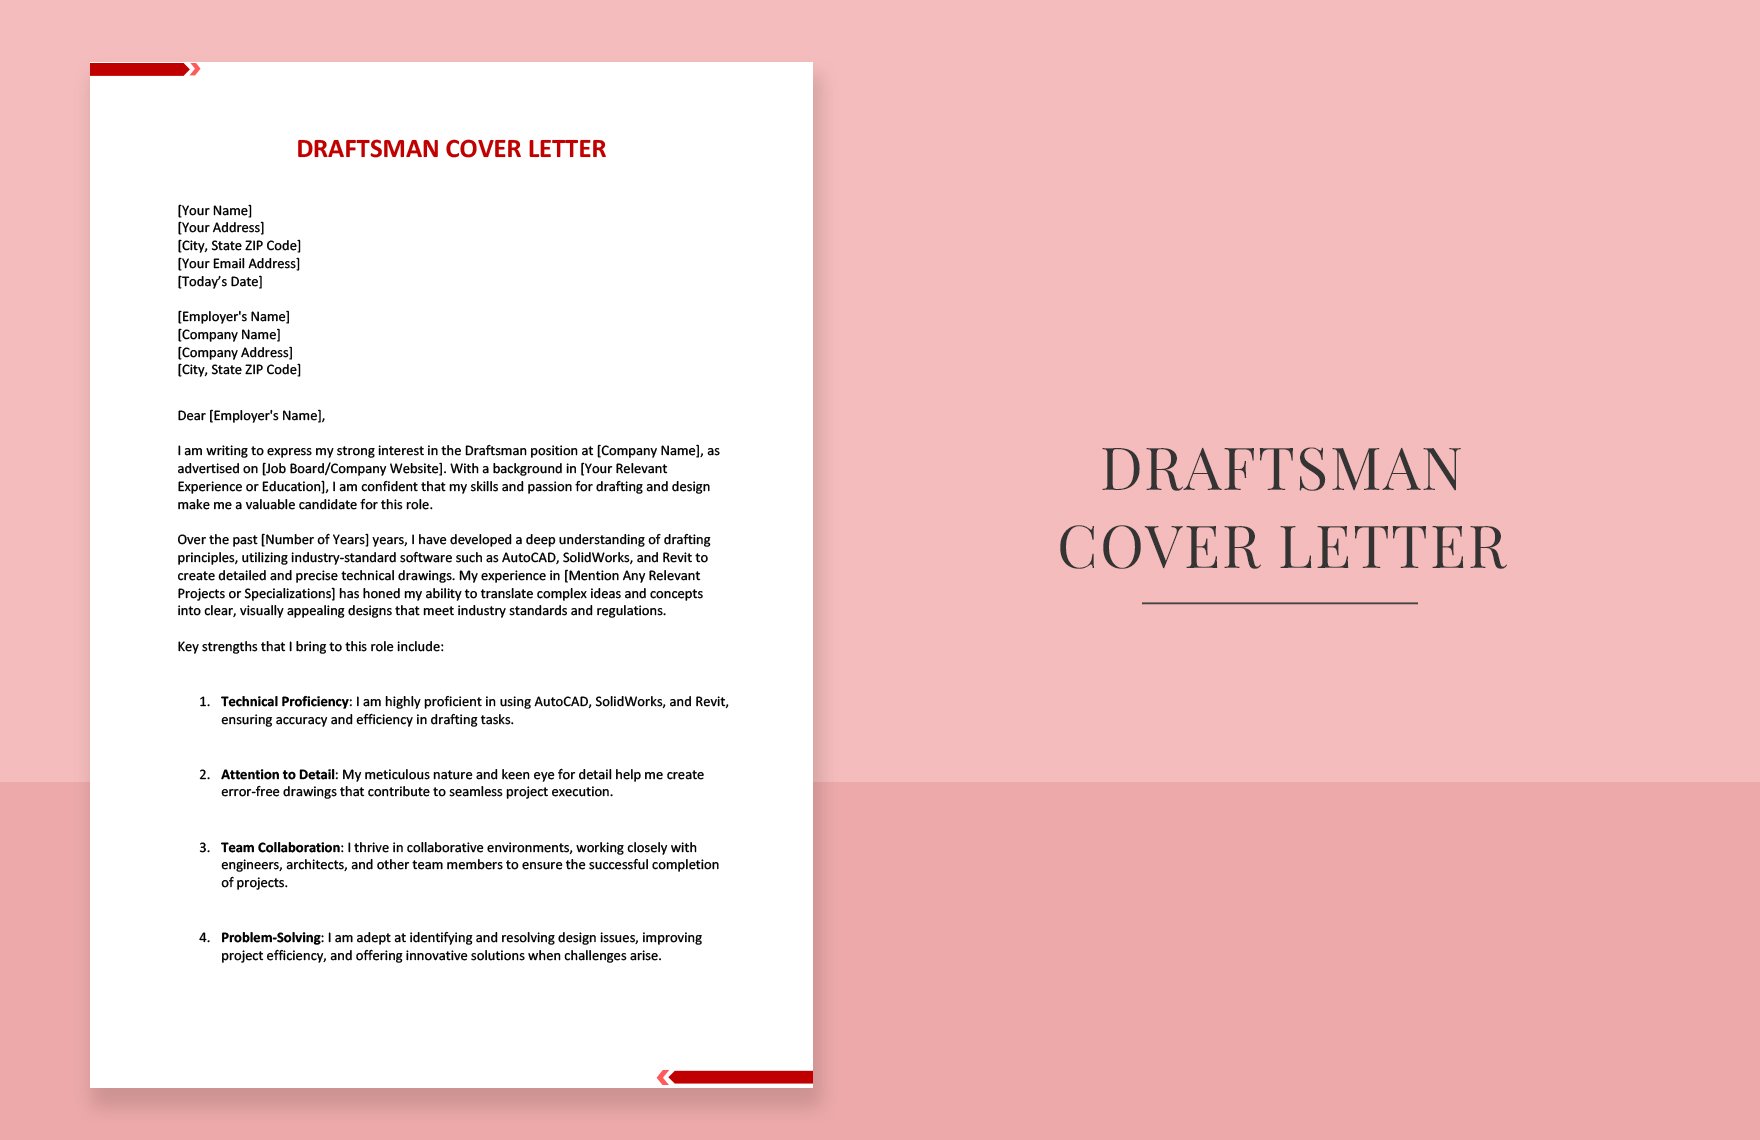 Draftsman Cover Letter in Word, Google Docs